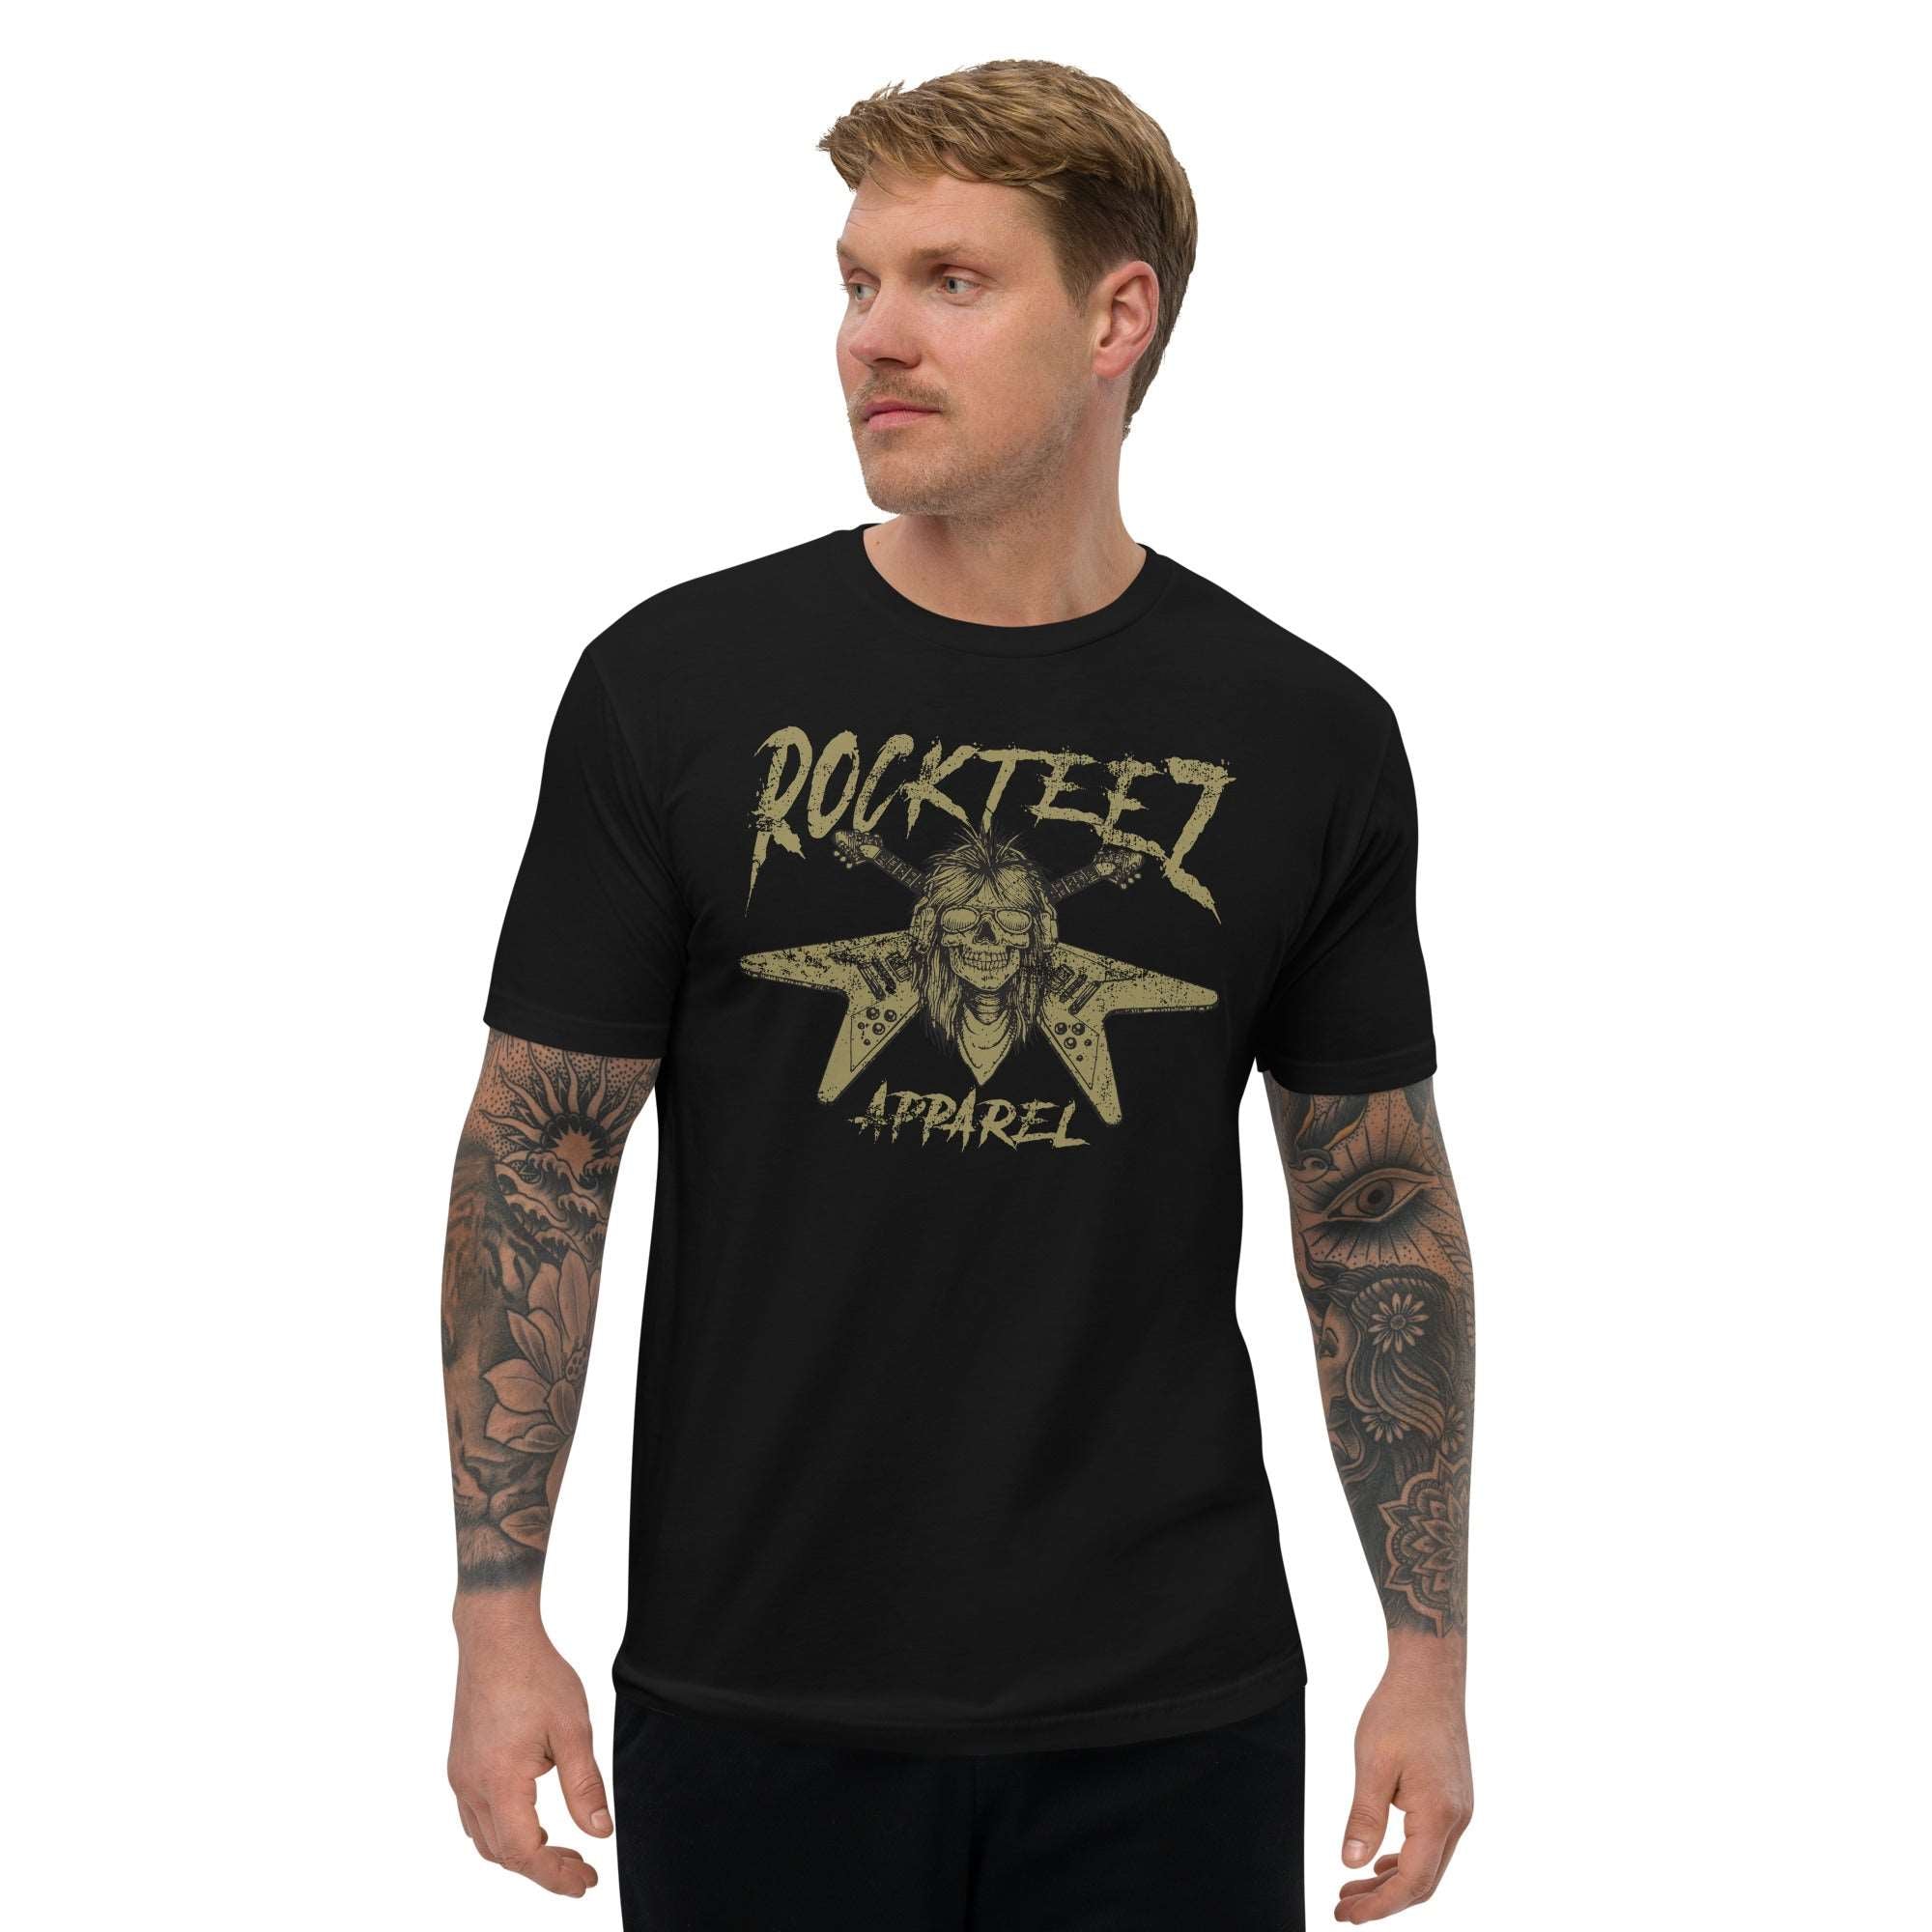 Rockteez Apparel Monocolor Logo Fitted T-Shirt